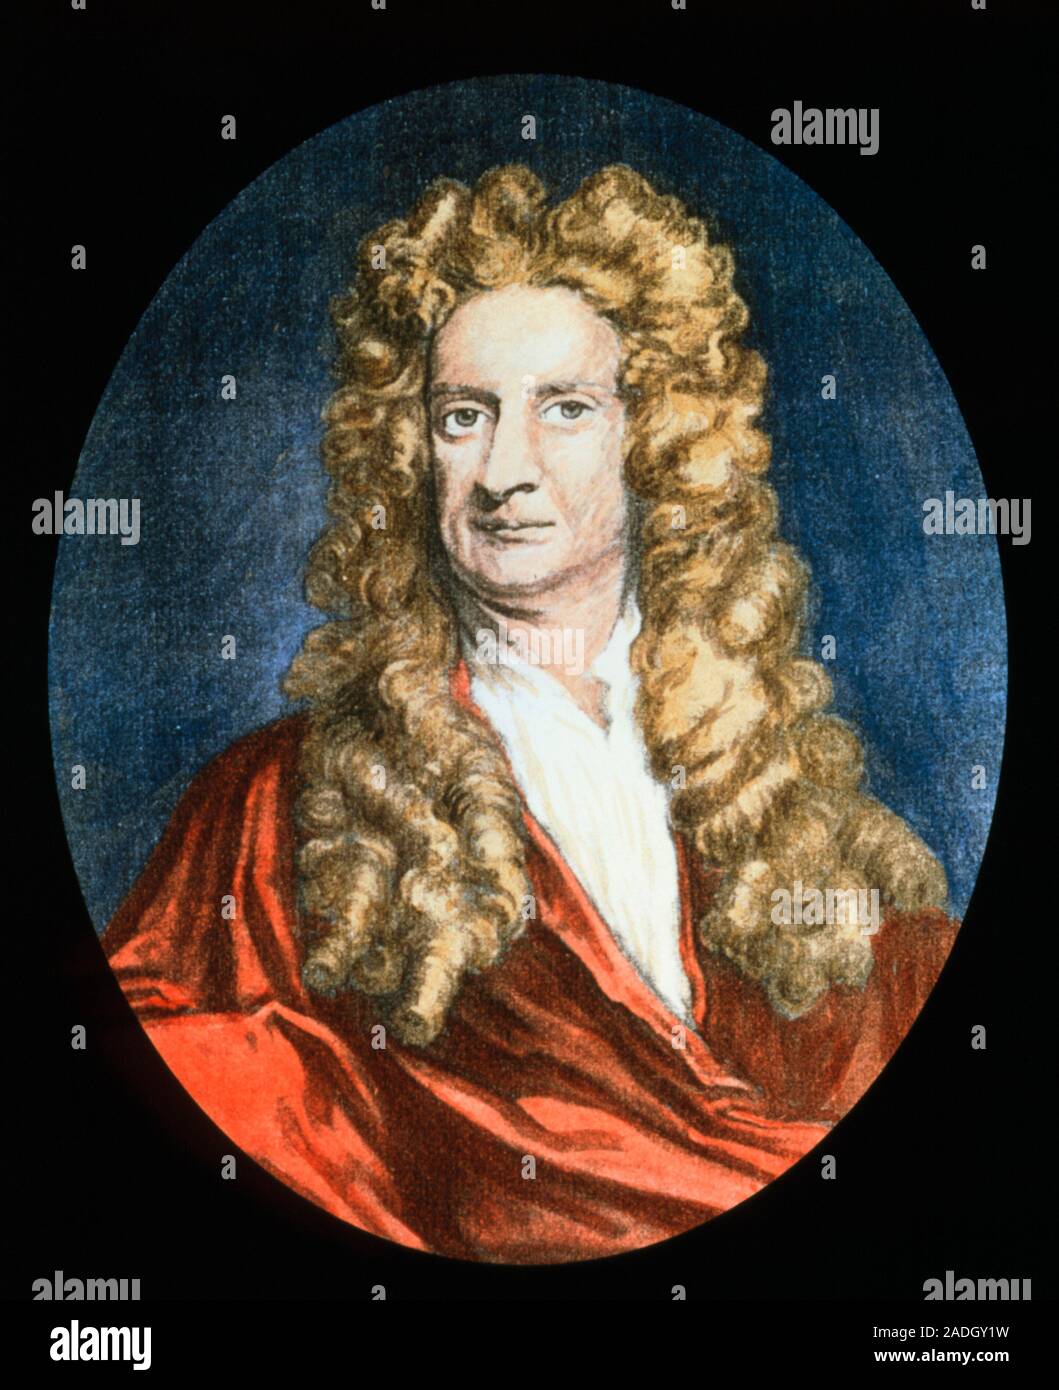 Isaac Newton Retrato Coloreado De Sir Isaac Newton 1642 1727 Físico Inglés Matemático Y 5331